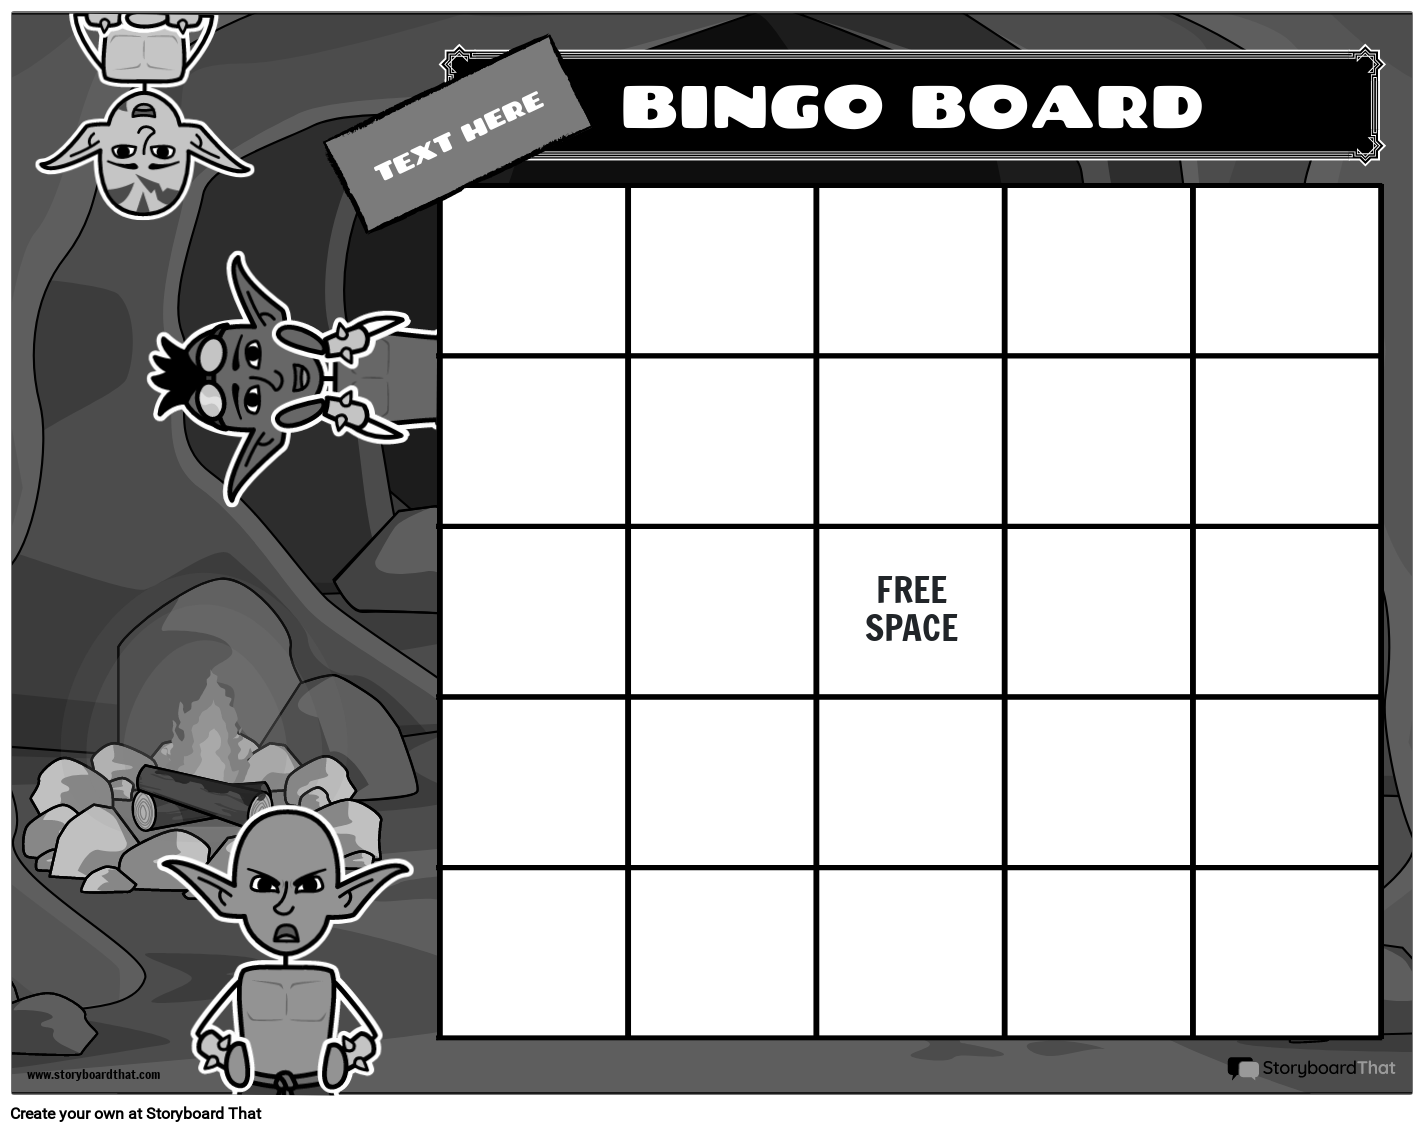 a-classic-bingo-games-party-jackpot-daub-free-bingo-blackout-cards-to